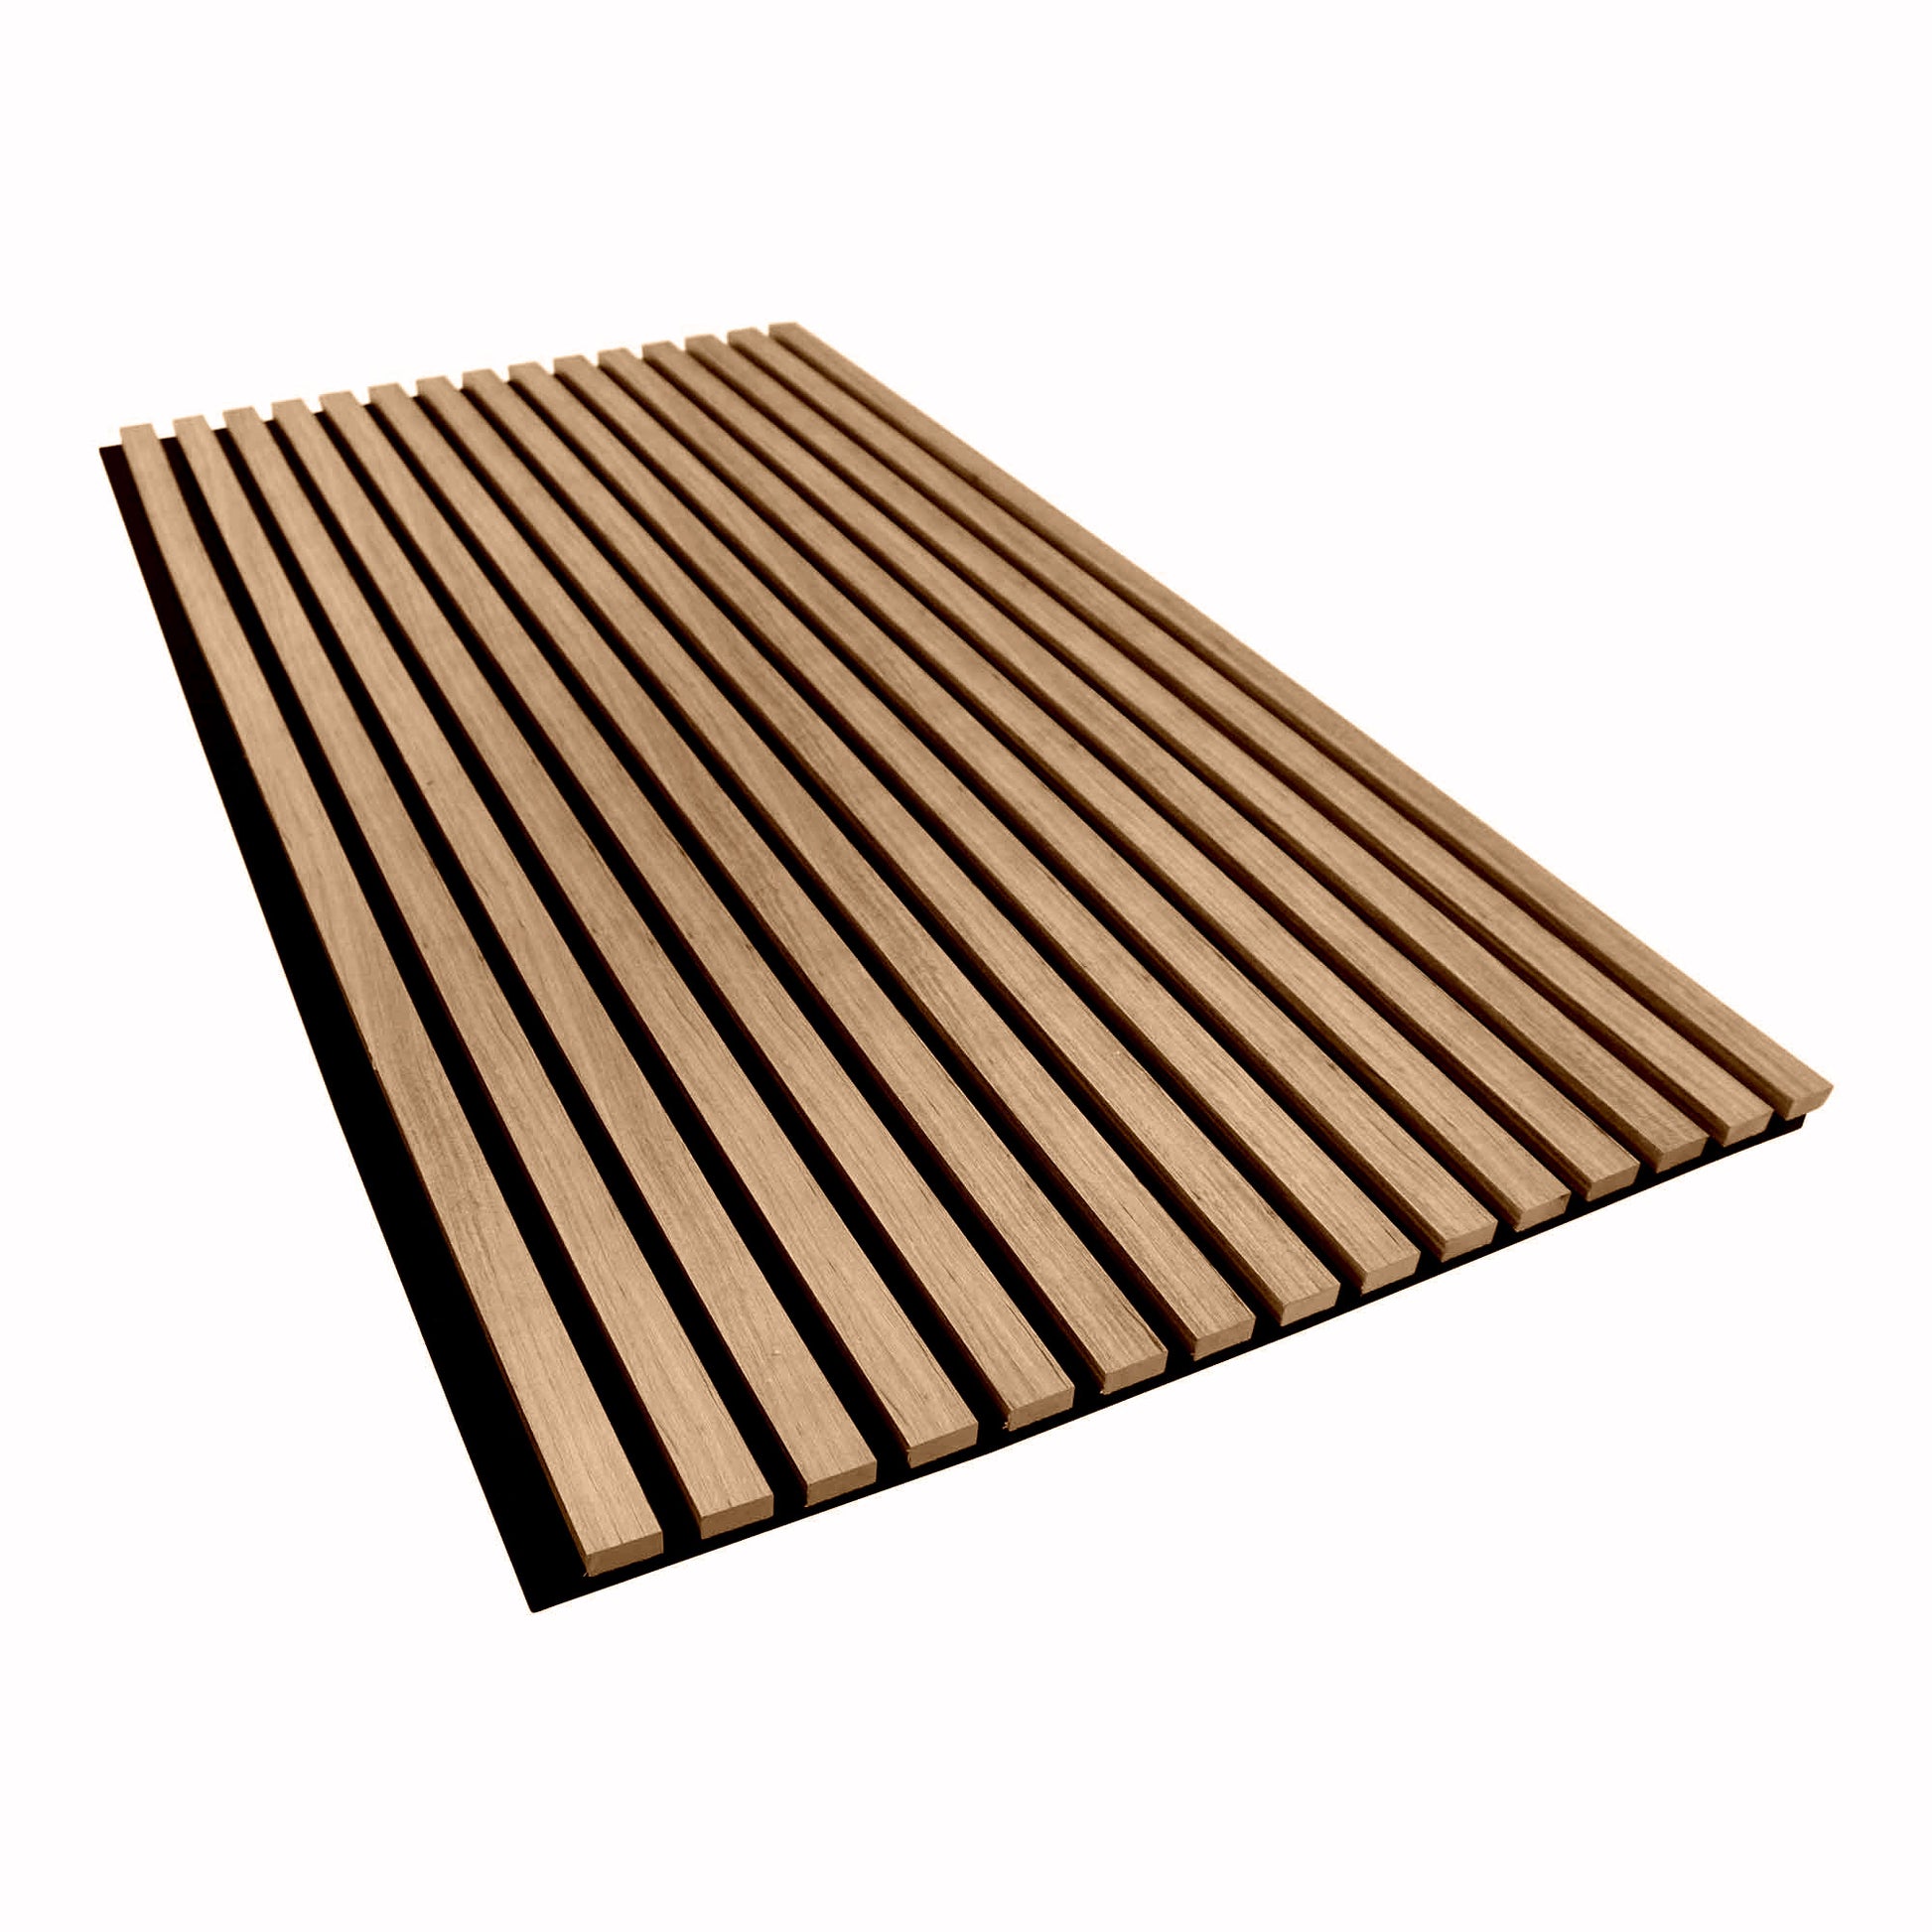 Light Walnut Acoustic Slat Wood Paneling for Soundproofing Walls - Wid –